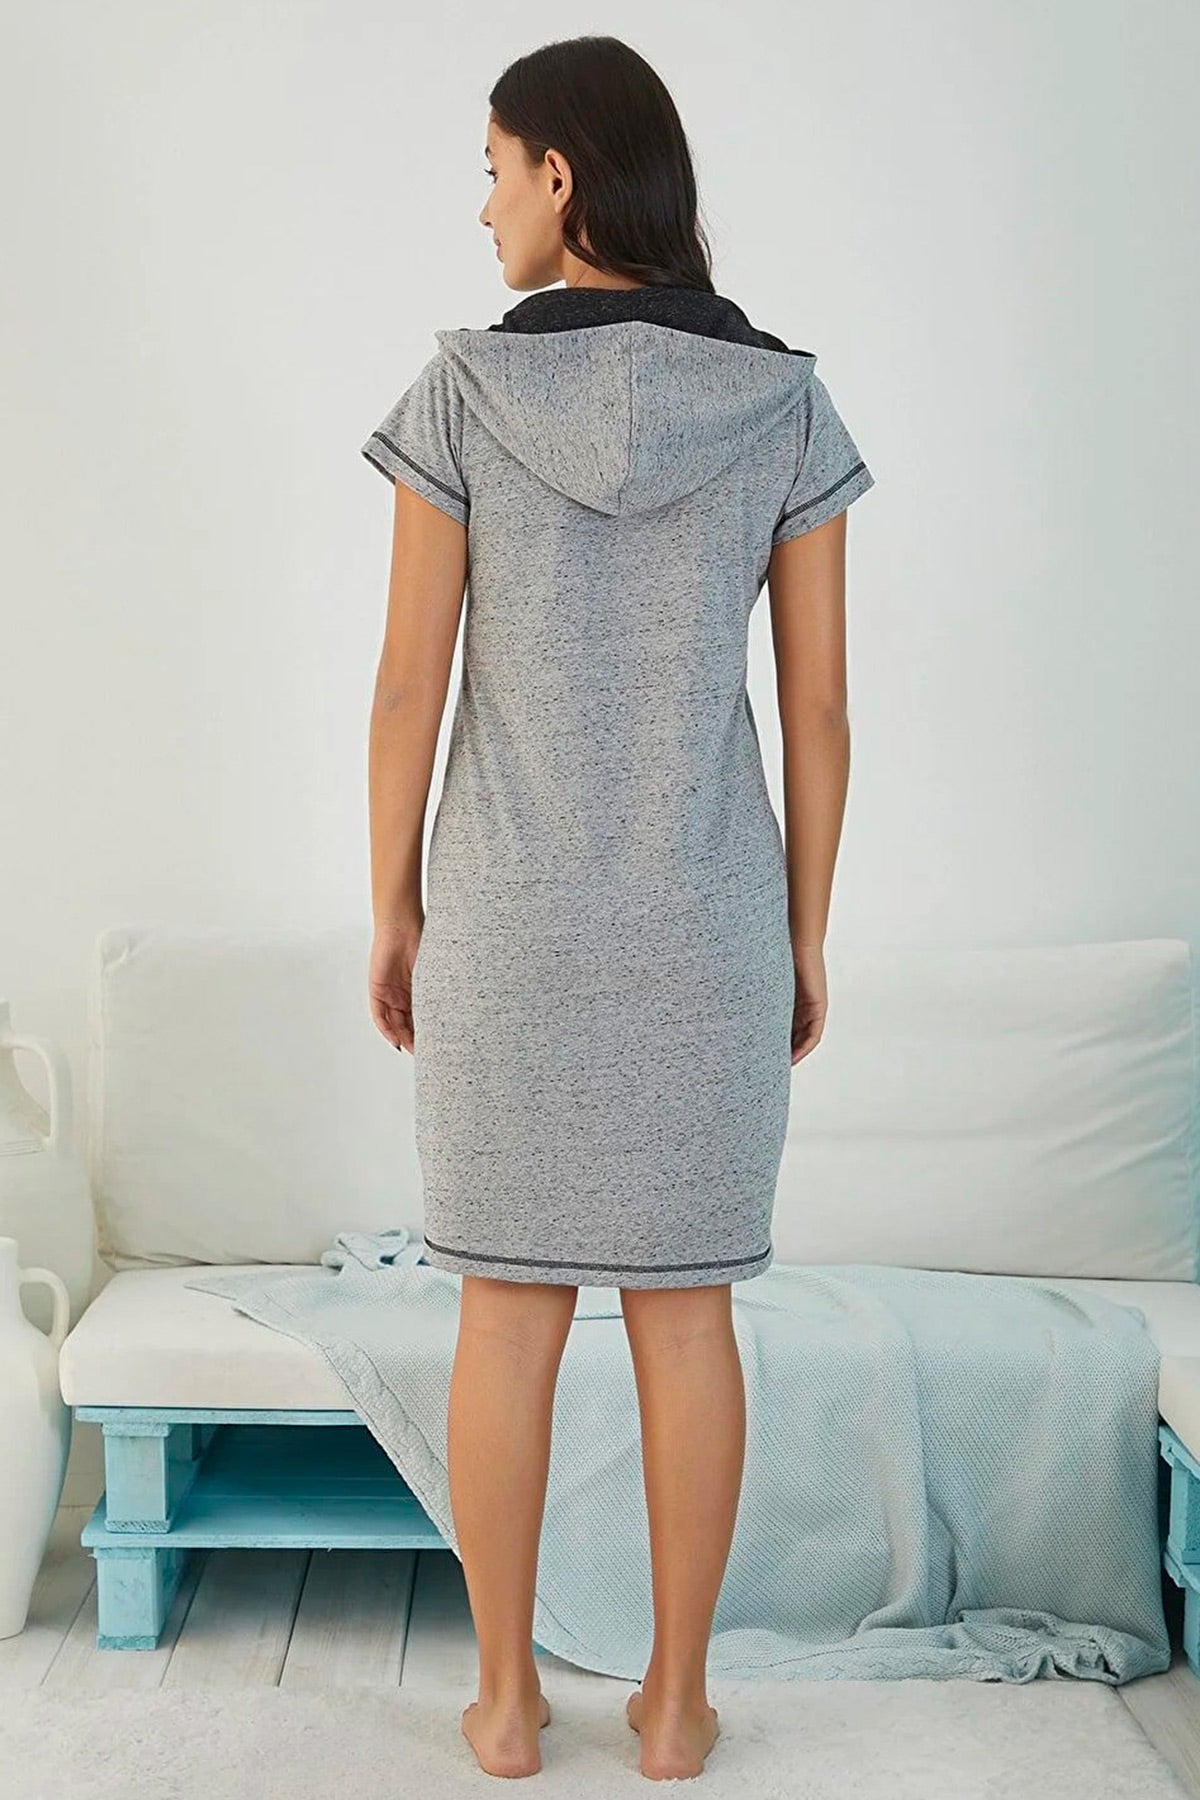 Hooded Melange Women's Nightgown Grey - 4809